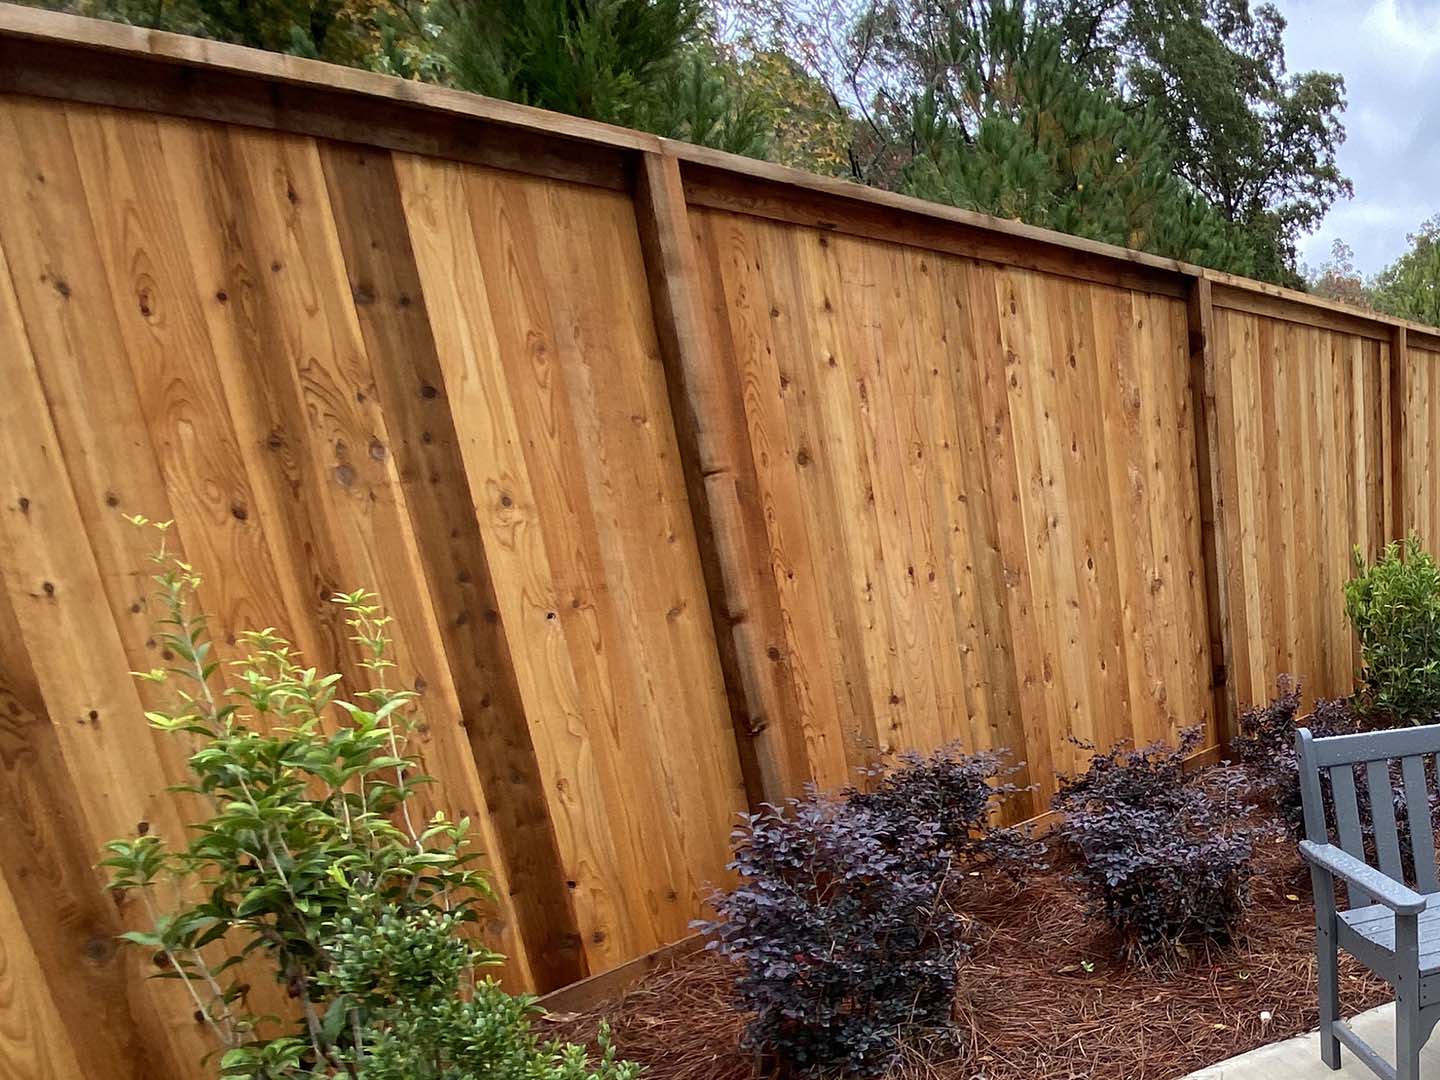 Pelham Al cap and trim style wood fence